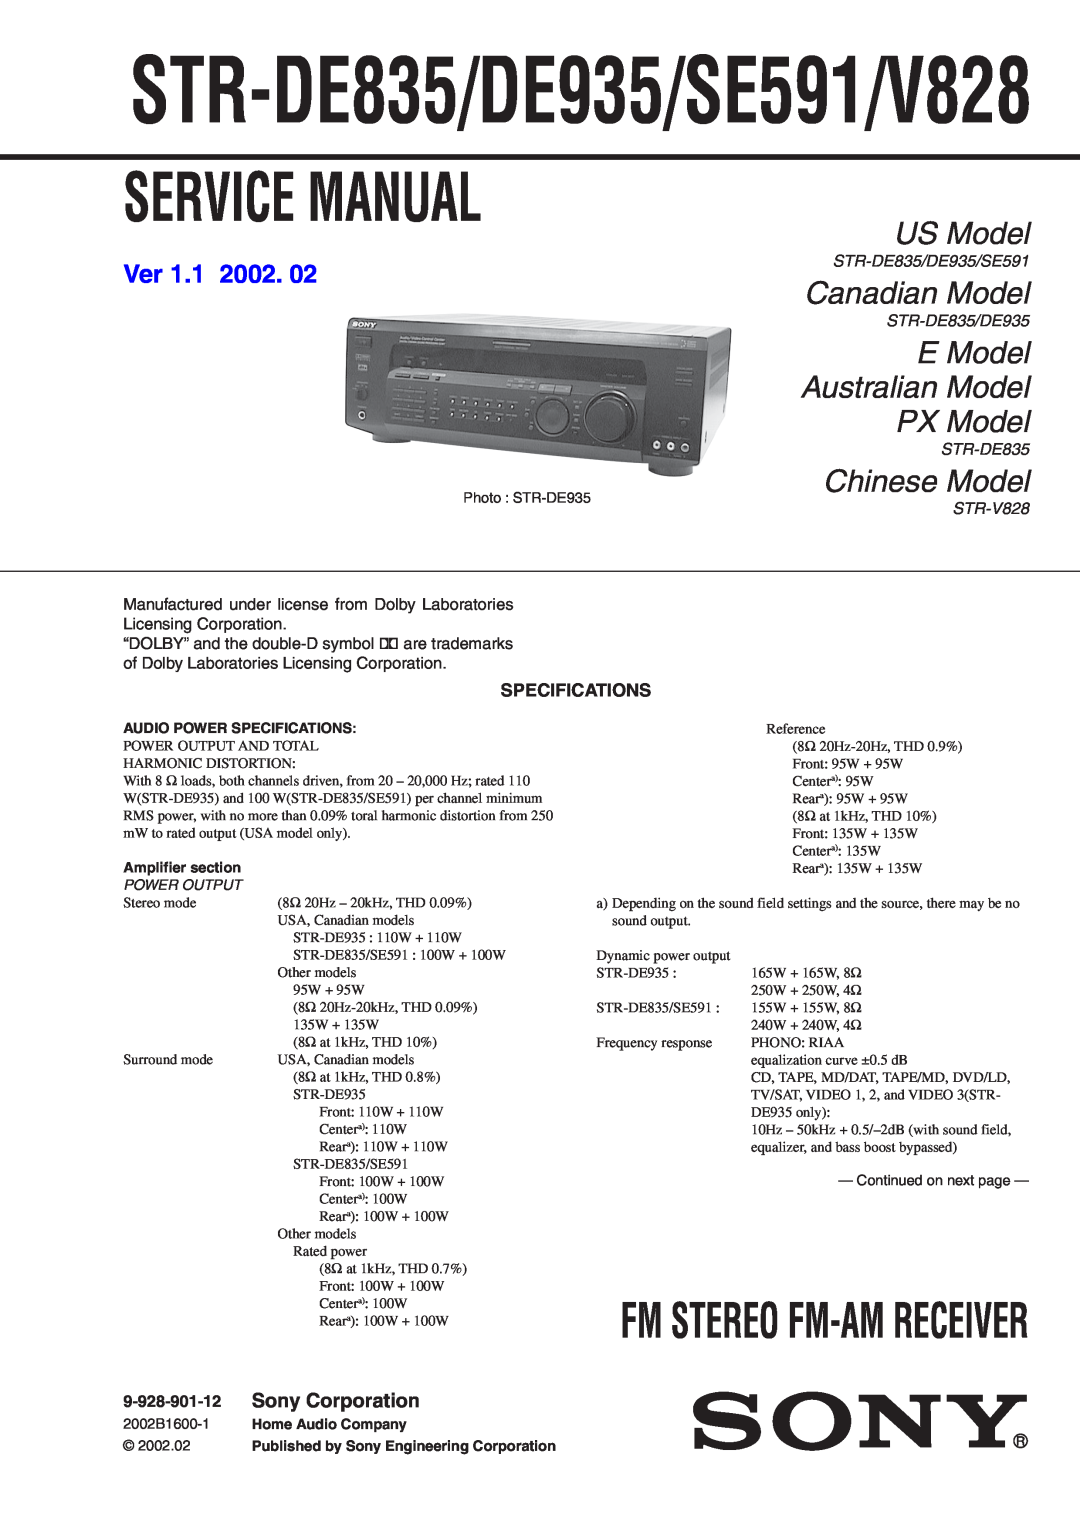 Sony specifications Service Manual, STR-DE835/DE935/SE591/V828, US Model, Canadian Model, Chinese Model, Specifications 